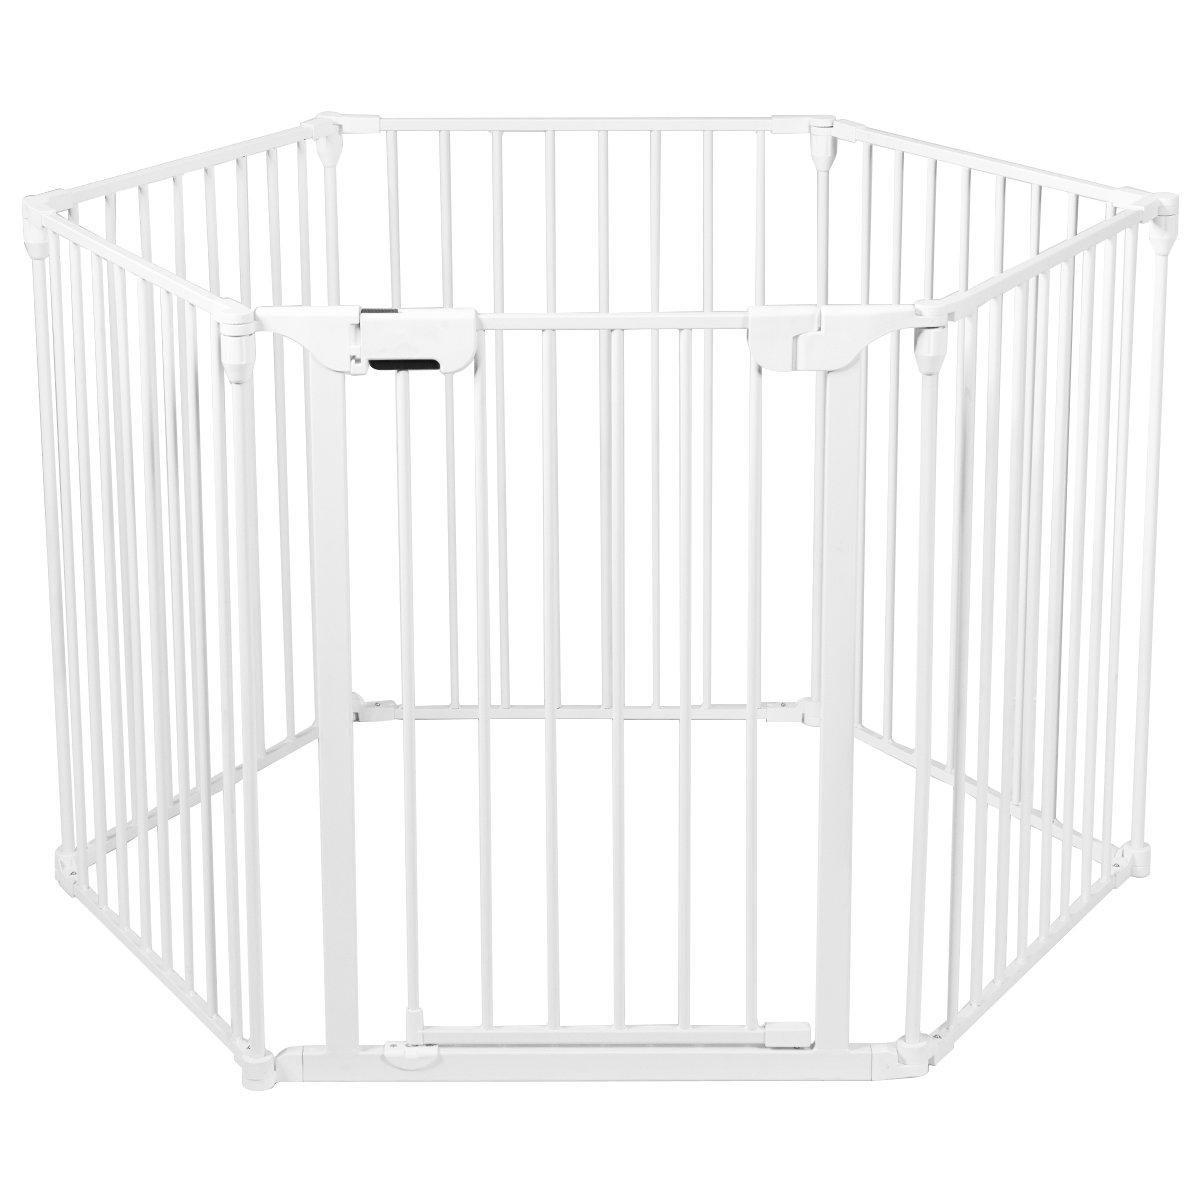 6 Panel Fireplace Fence Baby Pet Safety Gate Playpen Adjustable Room Divider